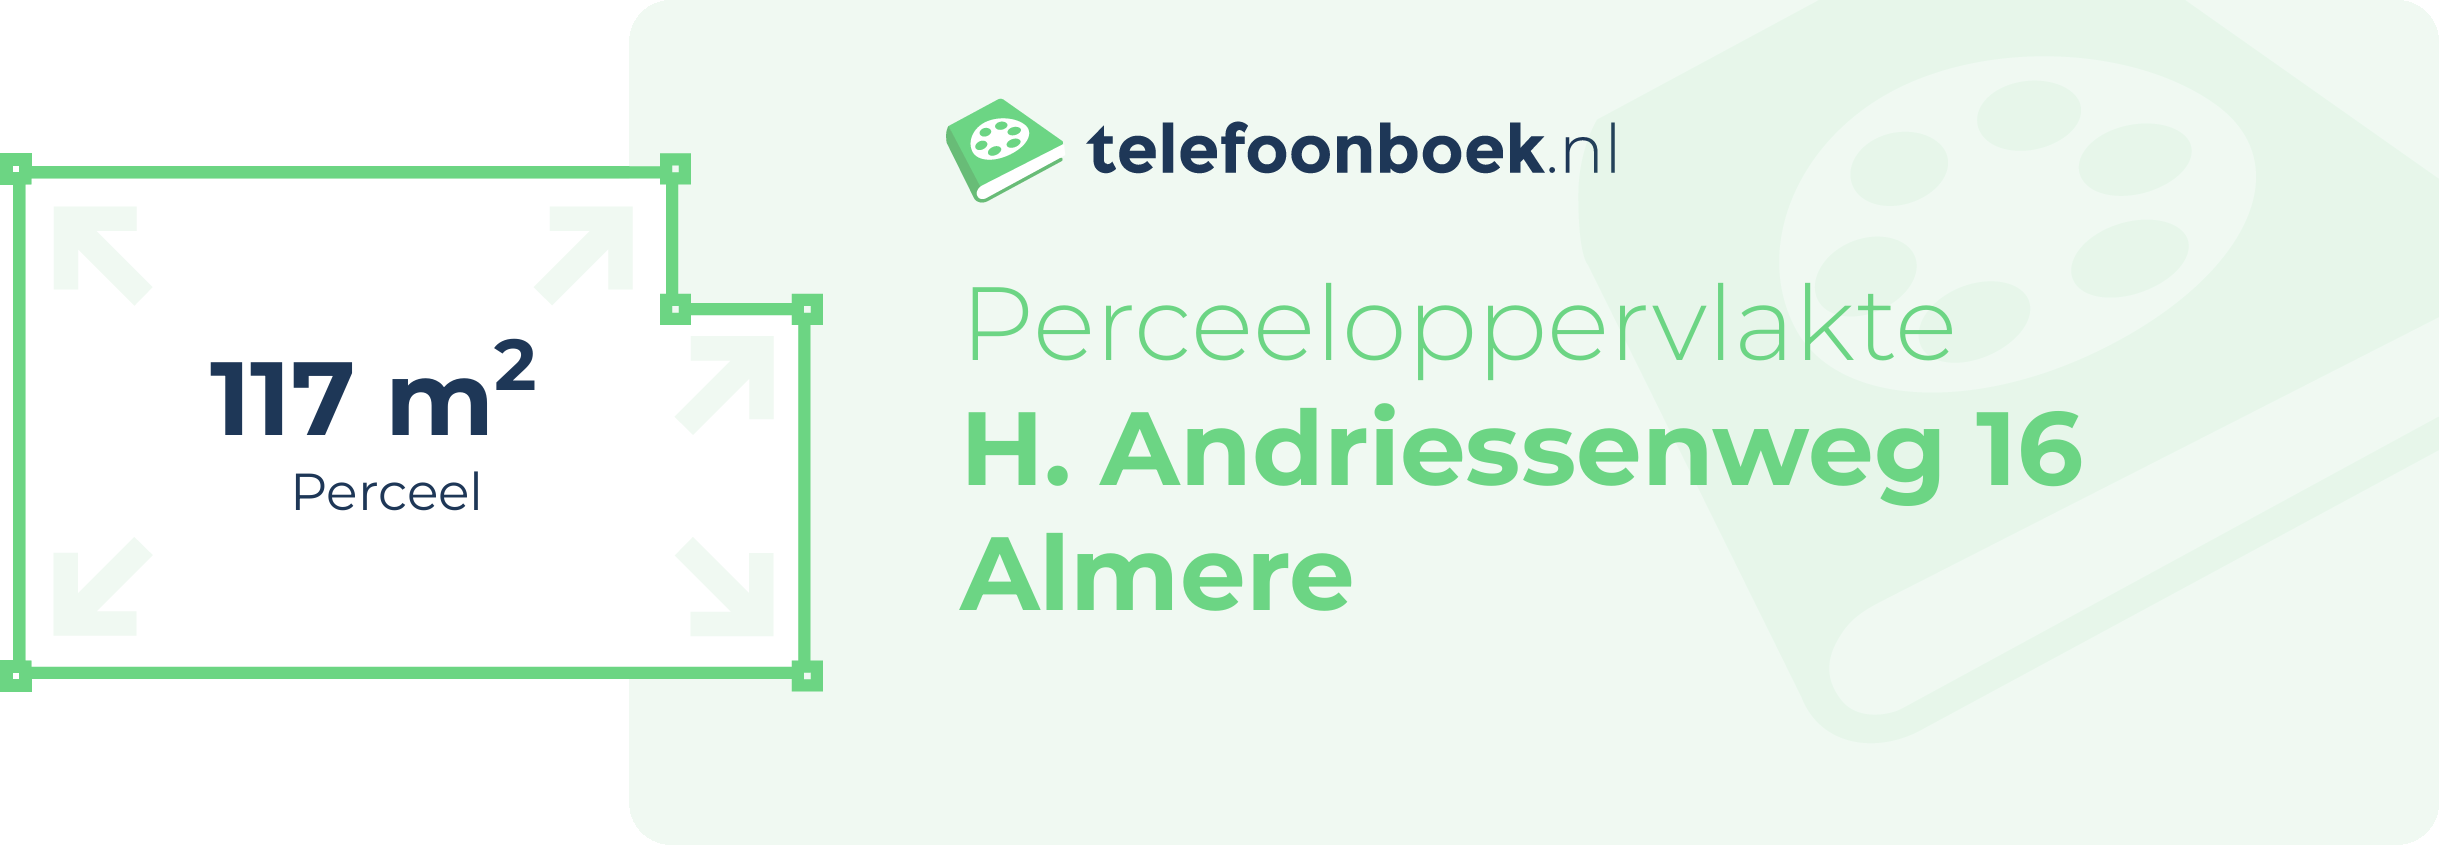 Perceeloppervlakte H. Andriessenweg 16 Almere